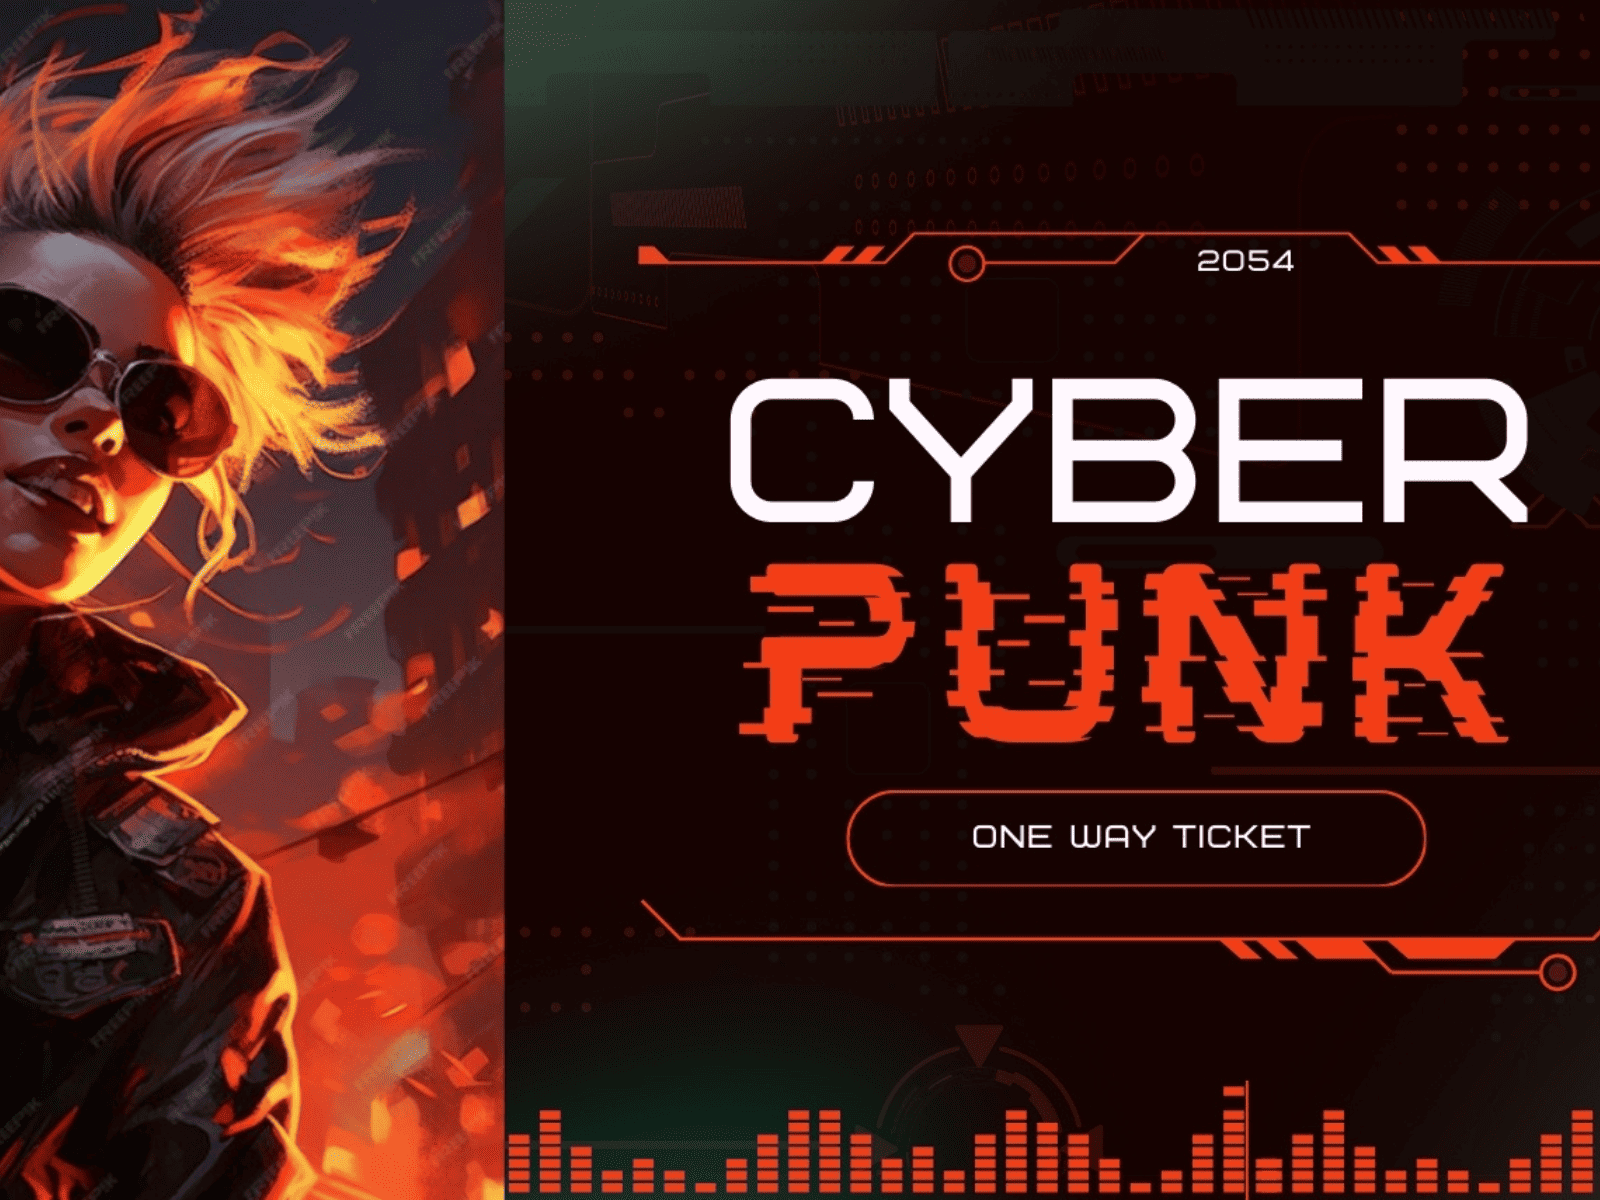 Cyberpunk 2054 — One Way Ticket